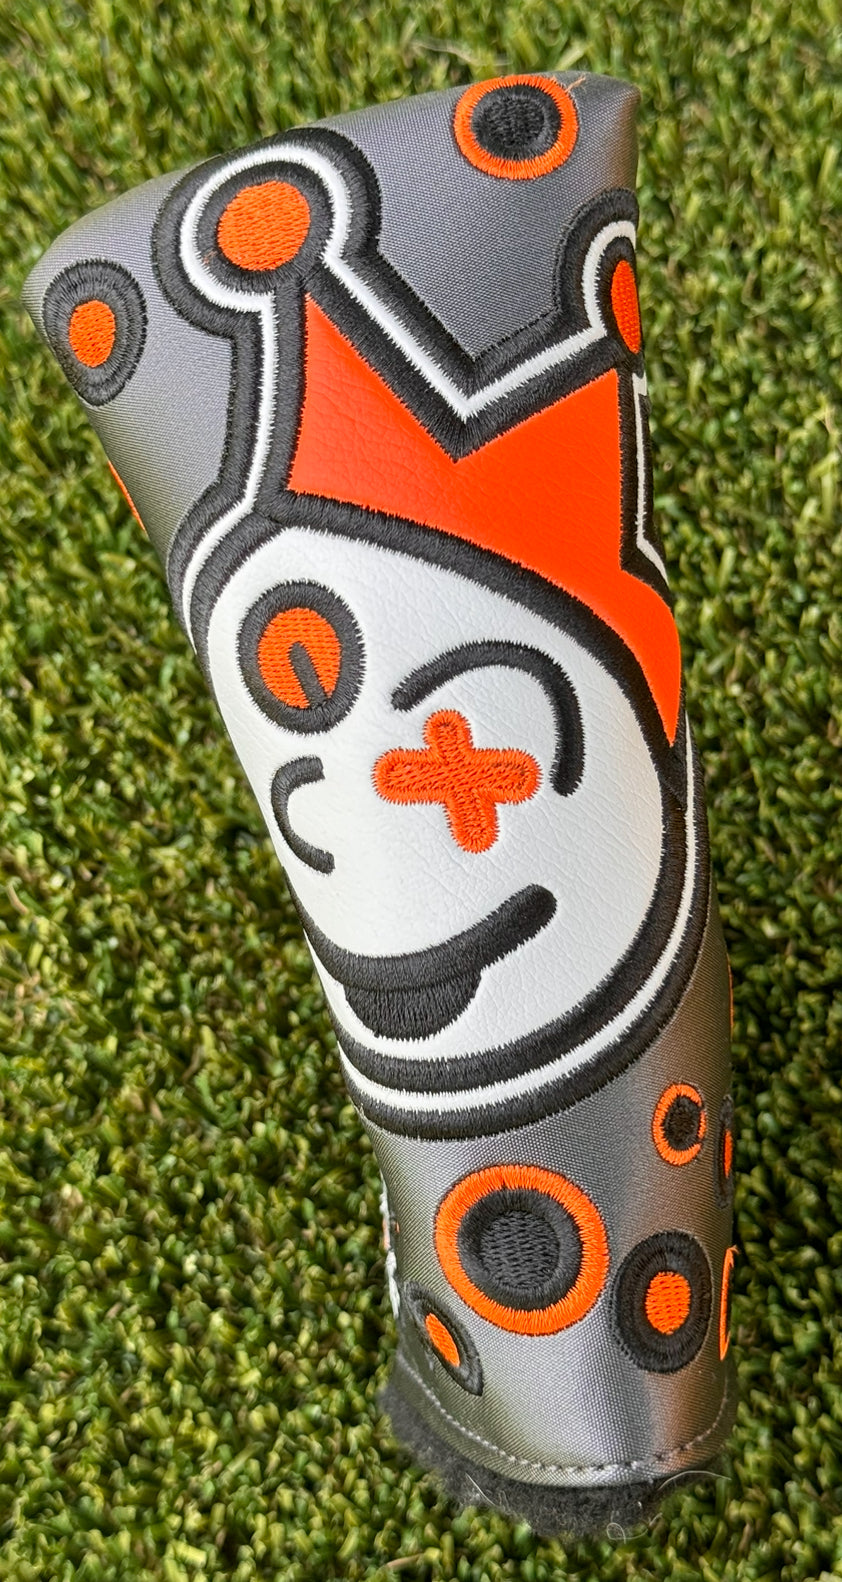 Scotty Cameron Custom Shop Gray/Orange Blade Headcover